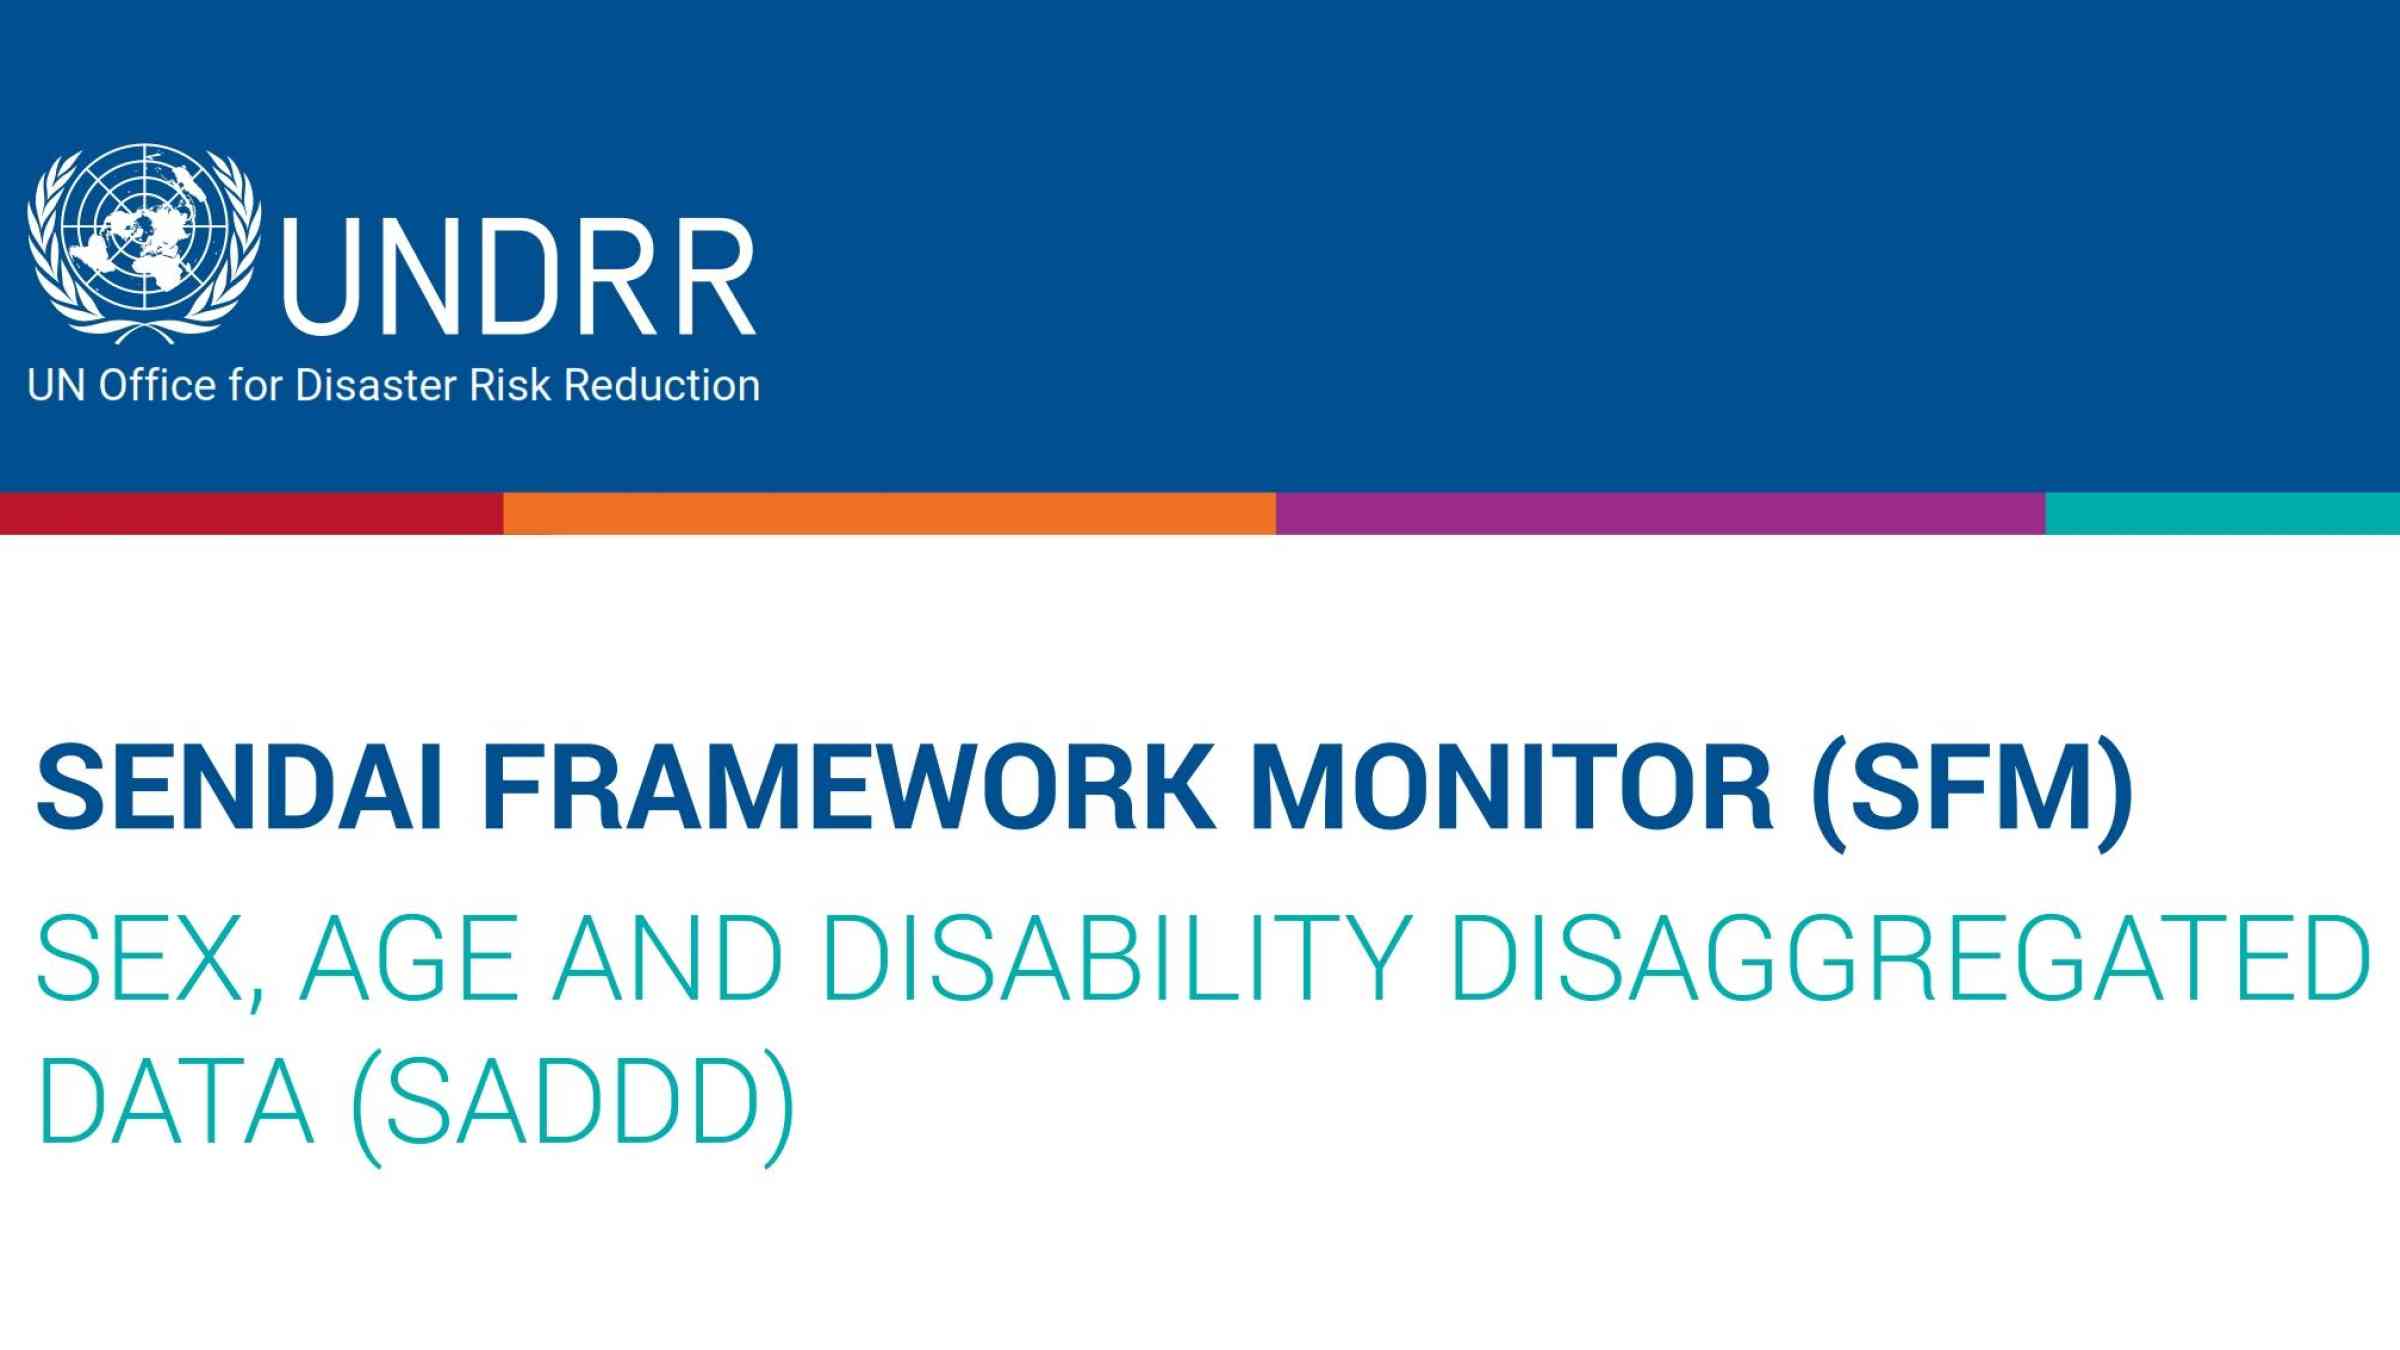 P2129-Sendai Framework Monitor SADDD digital